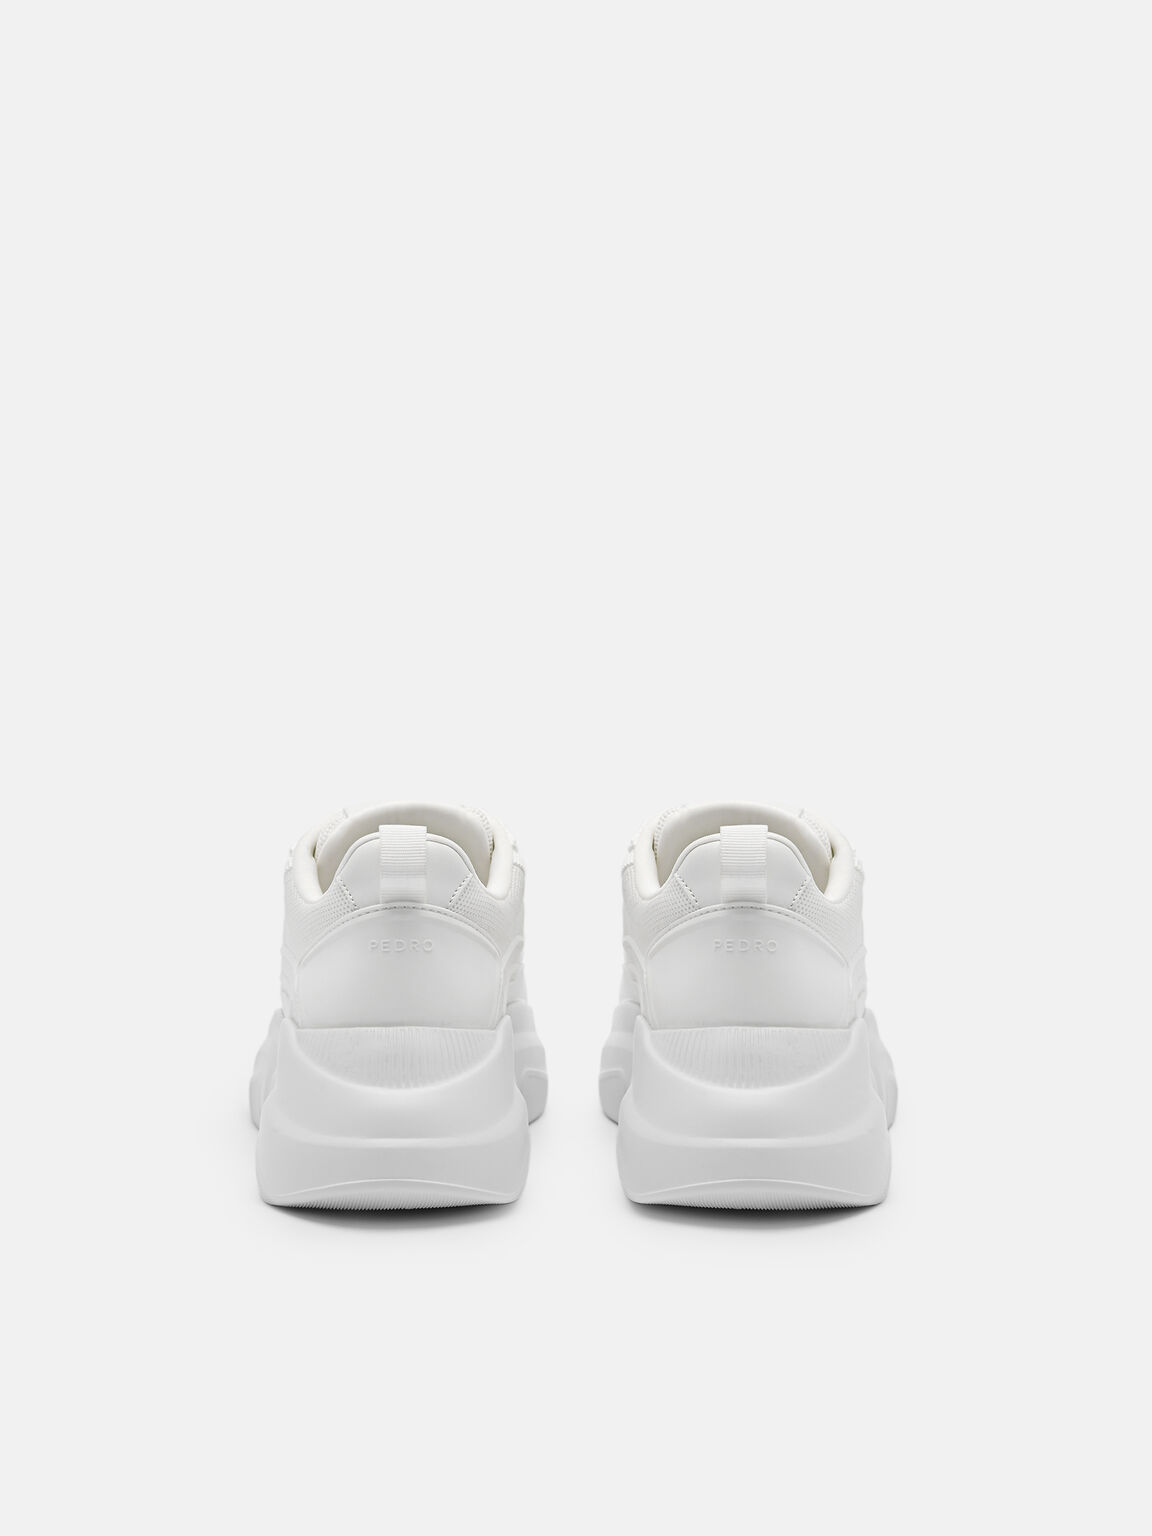 Altura Sneakers, White